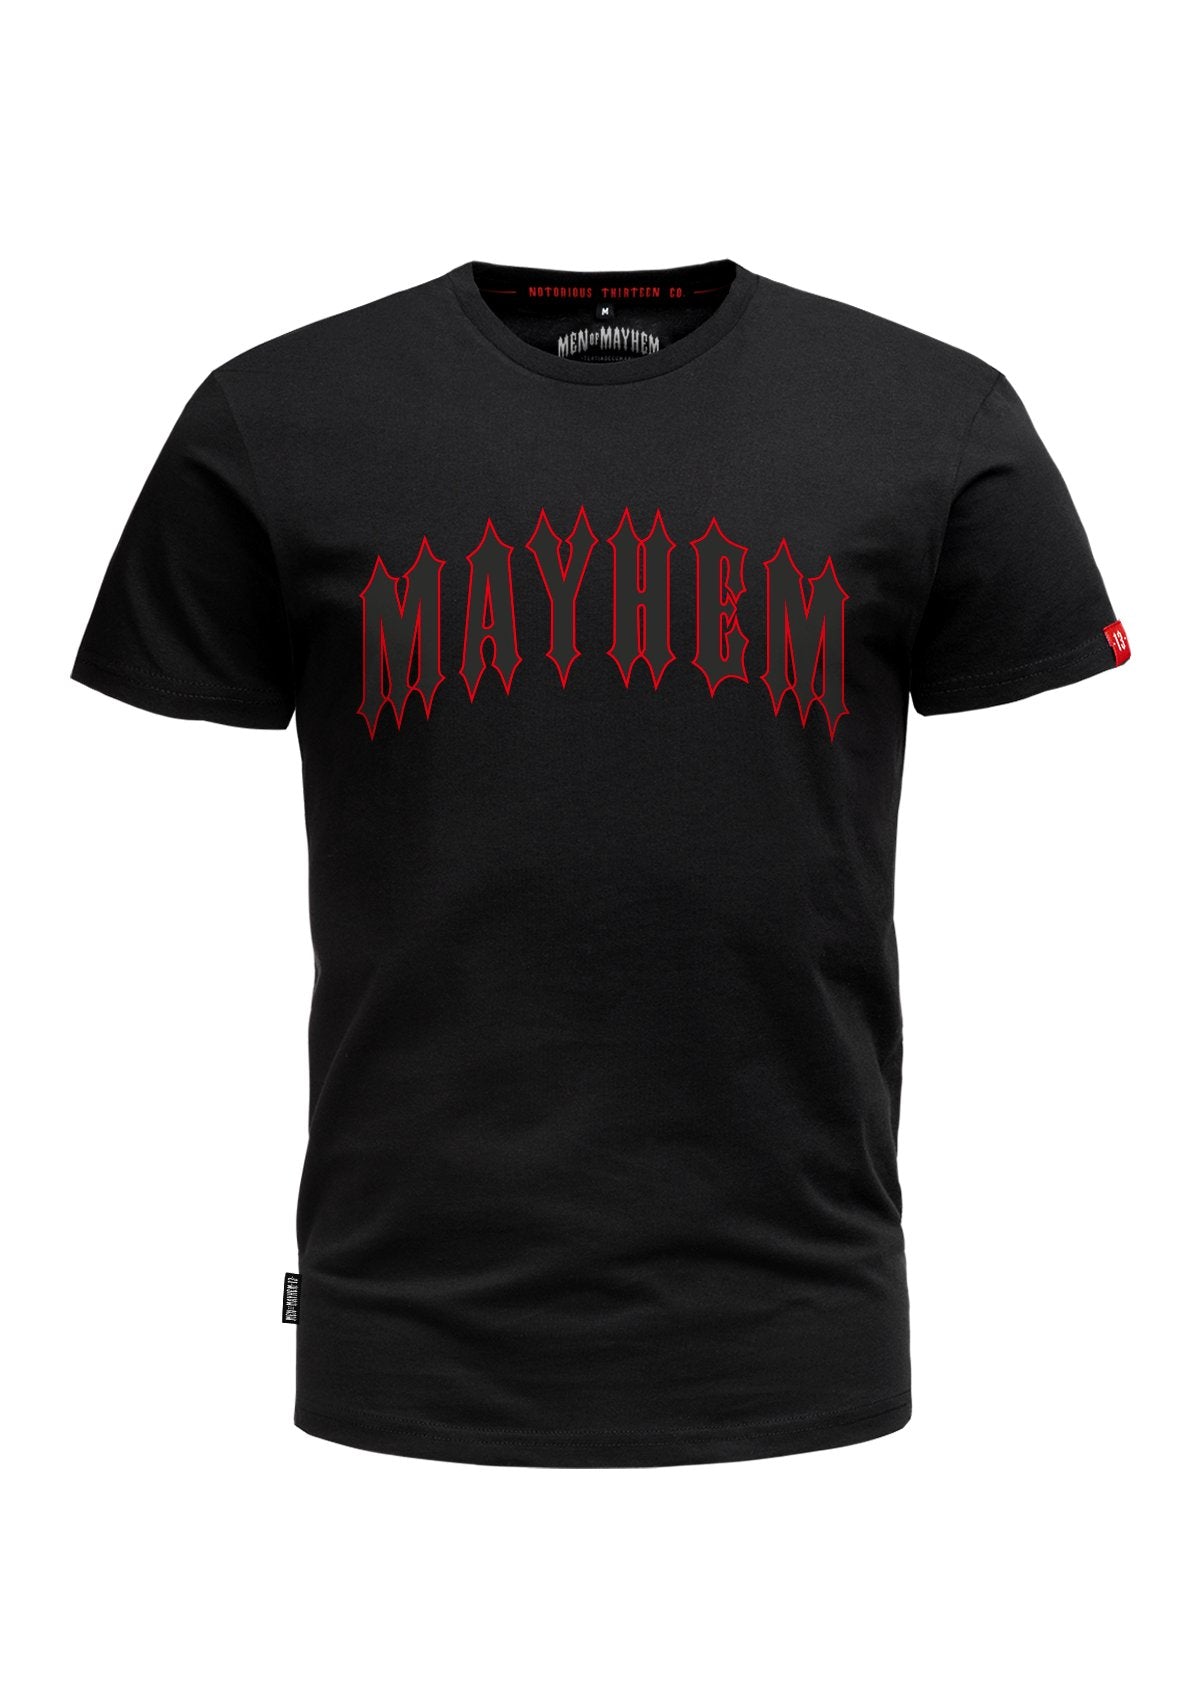 T-Shirt Mayhem XIII B/B/R - MEN OF MAYHEM - ALAIKO-EXCHANGES-MM-M-1010-TMX-BBR - BBR - black